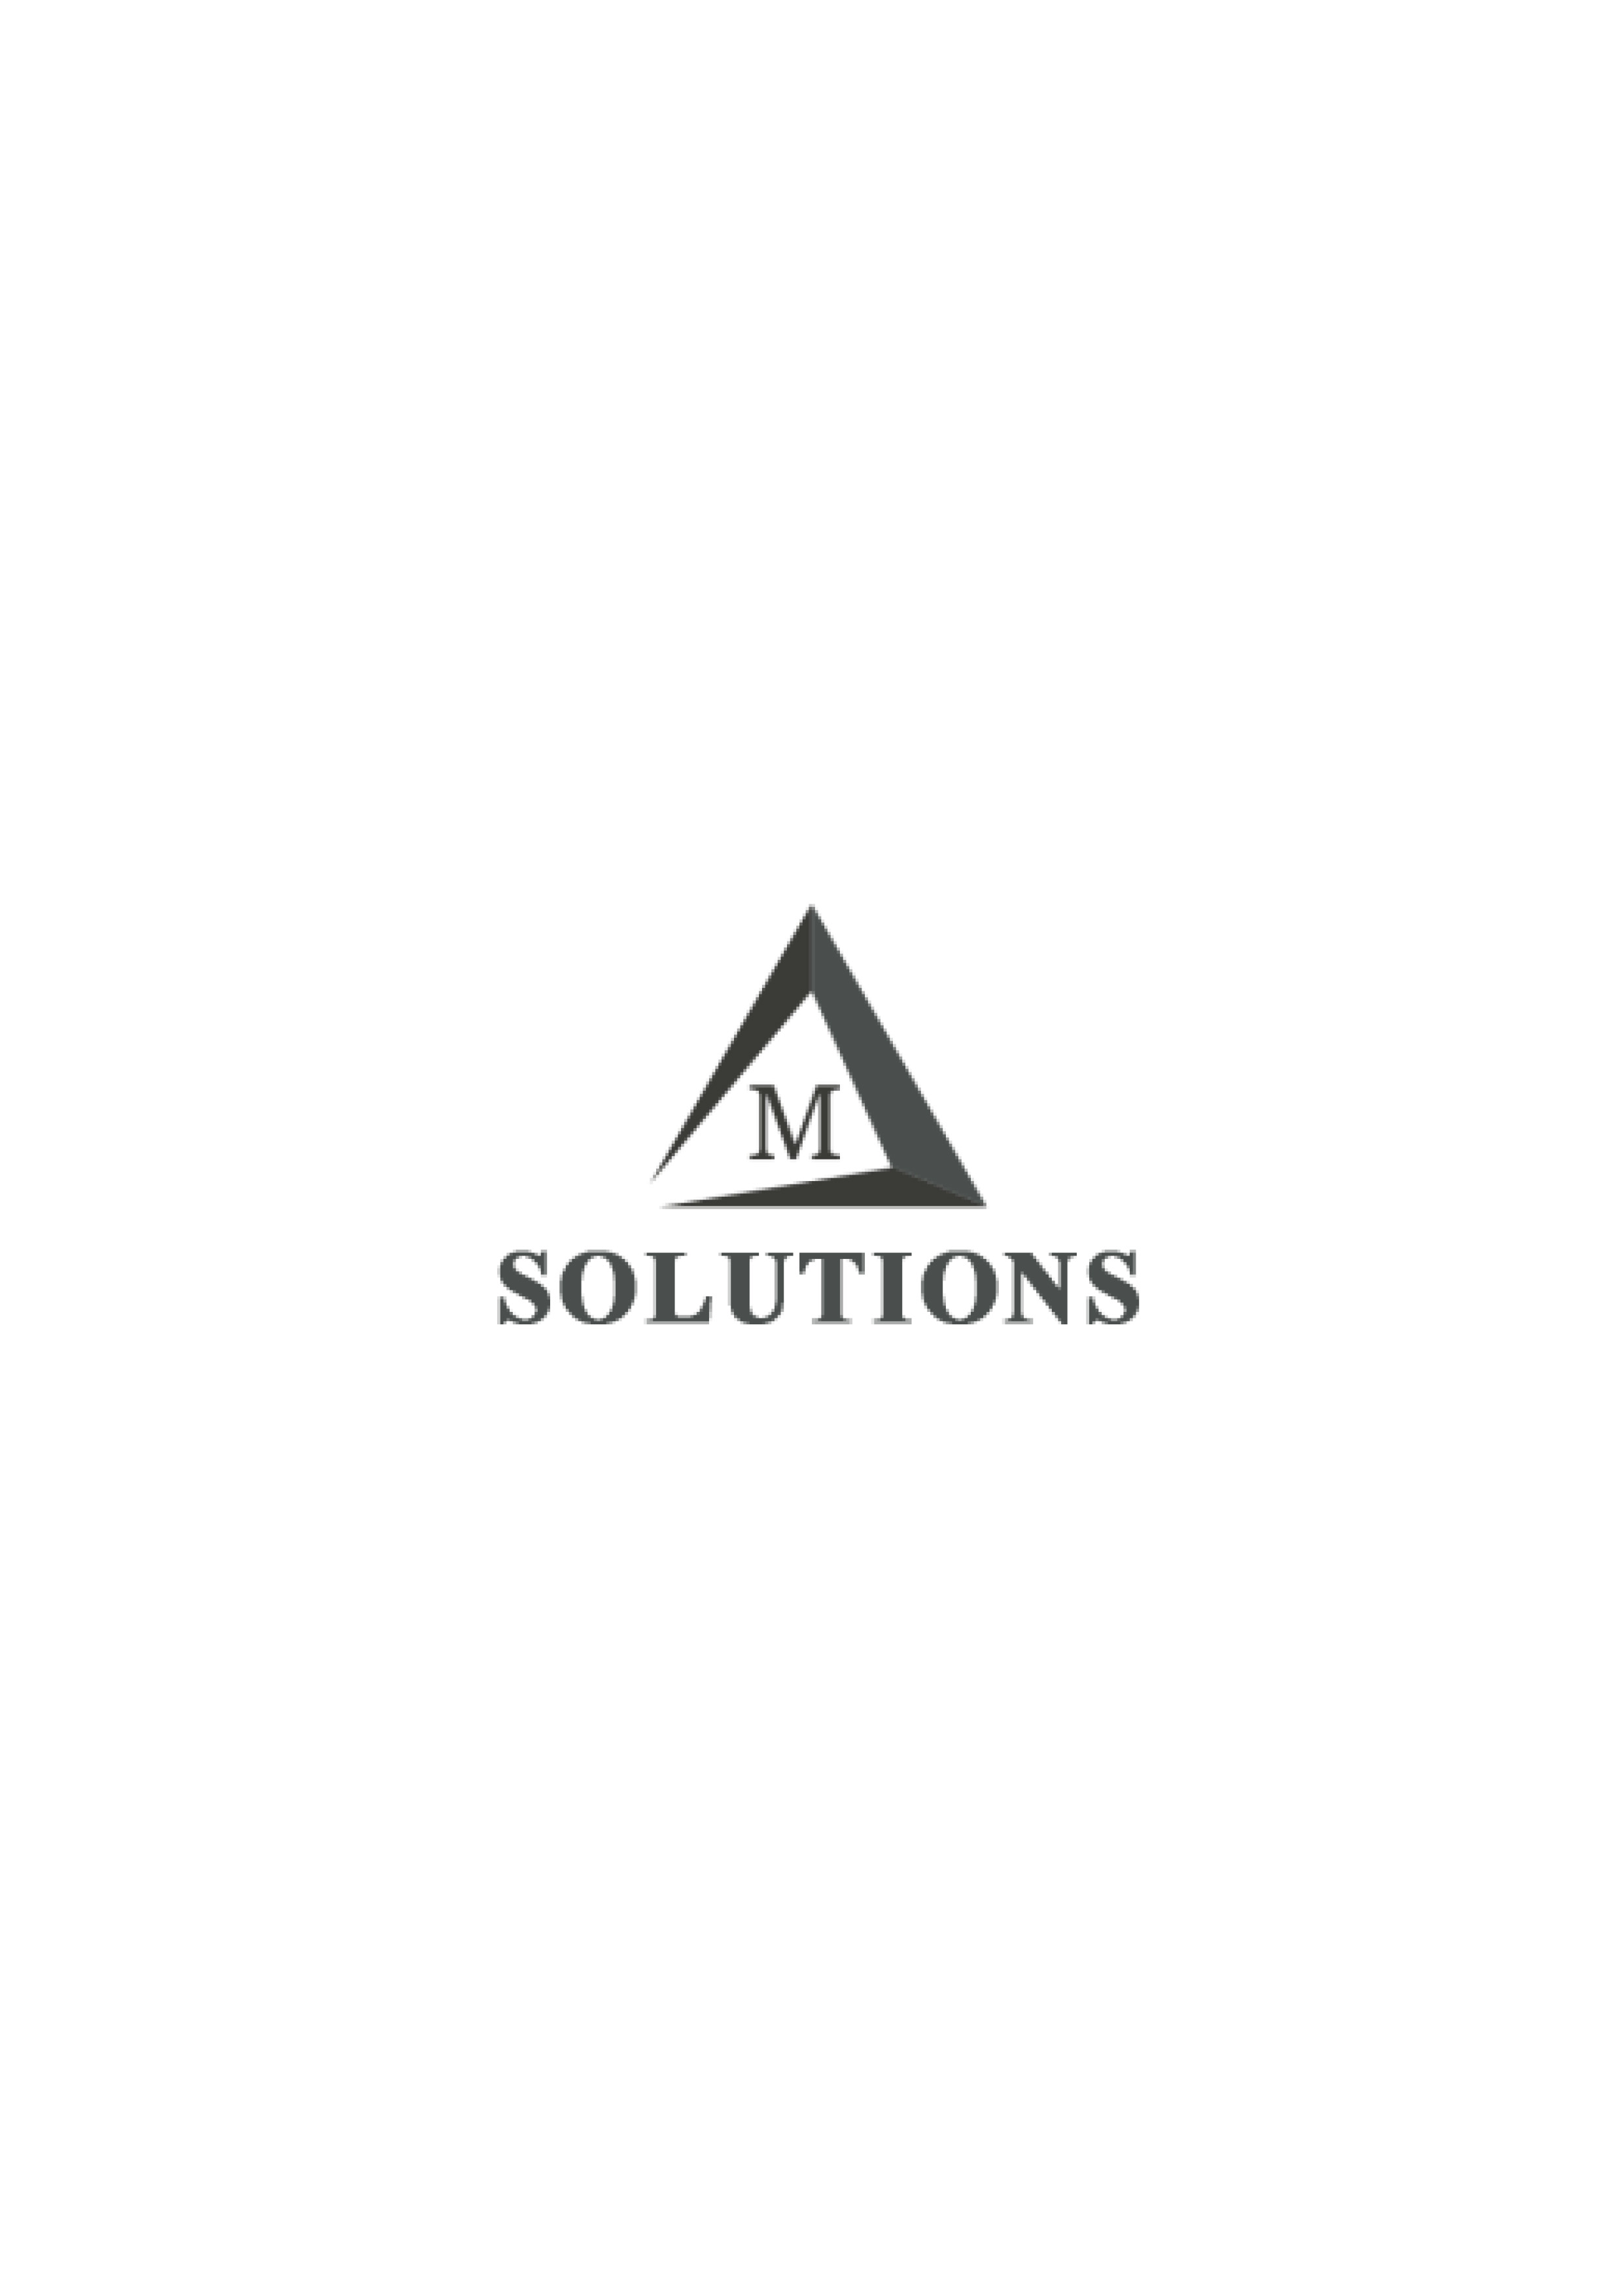 M Solutions Digital logo